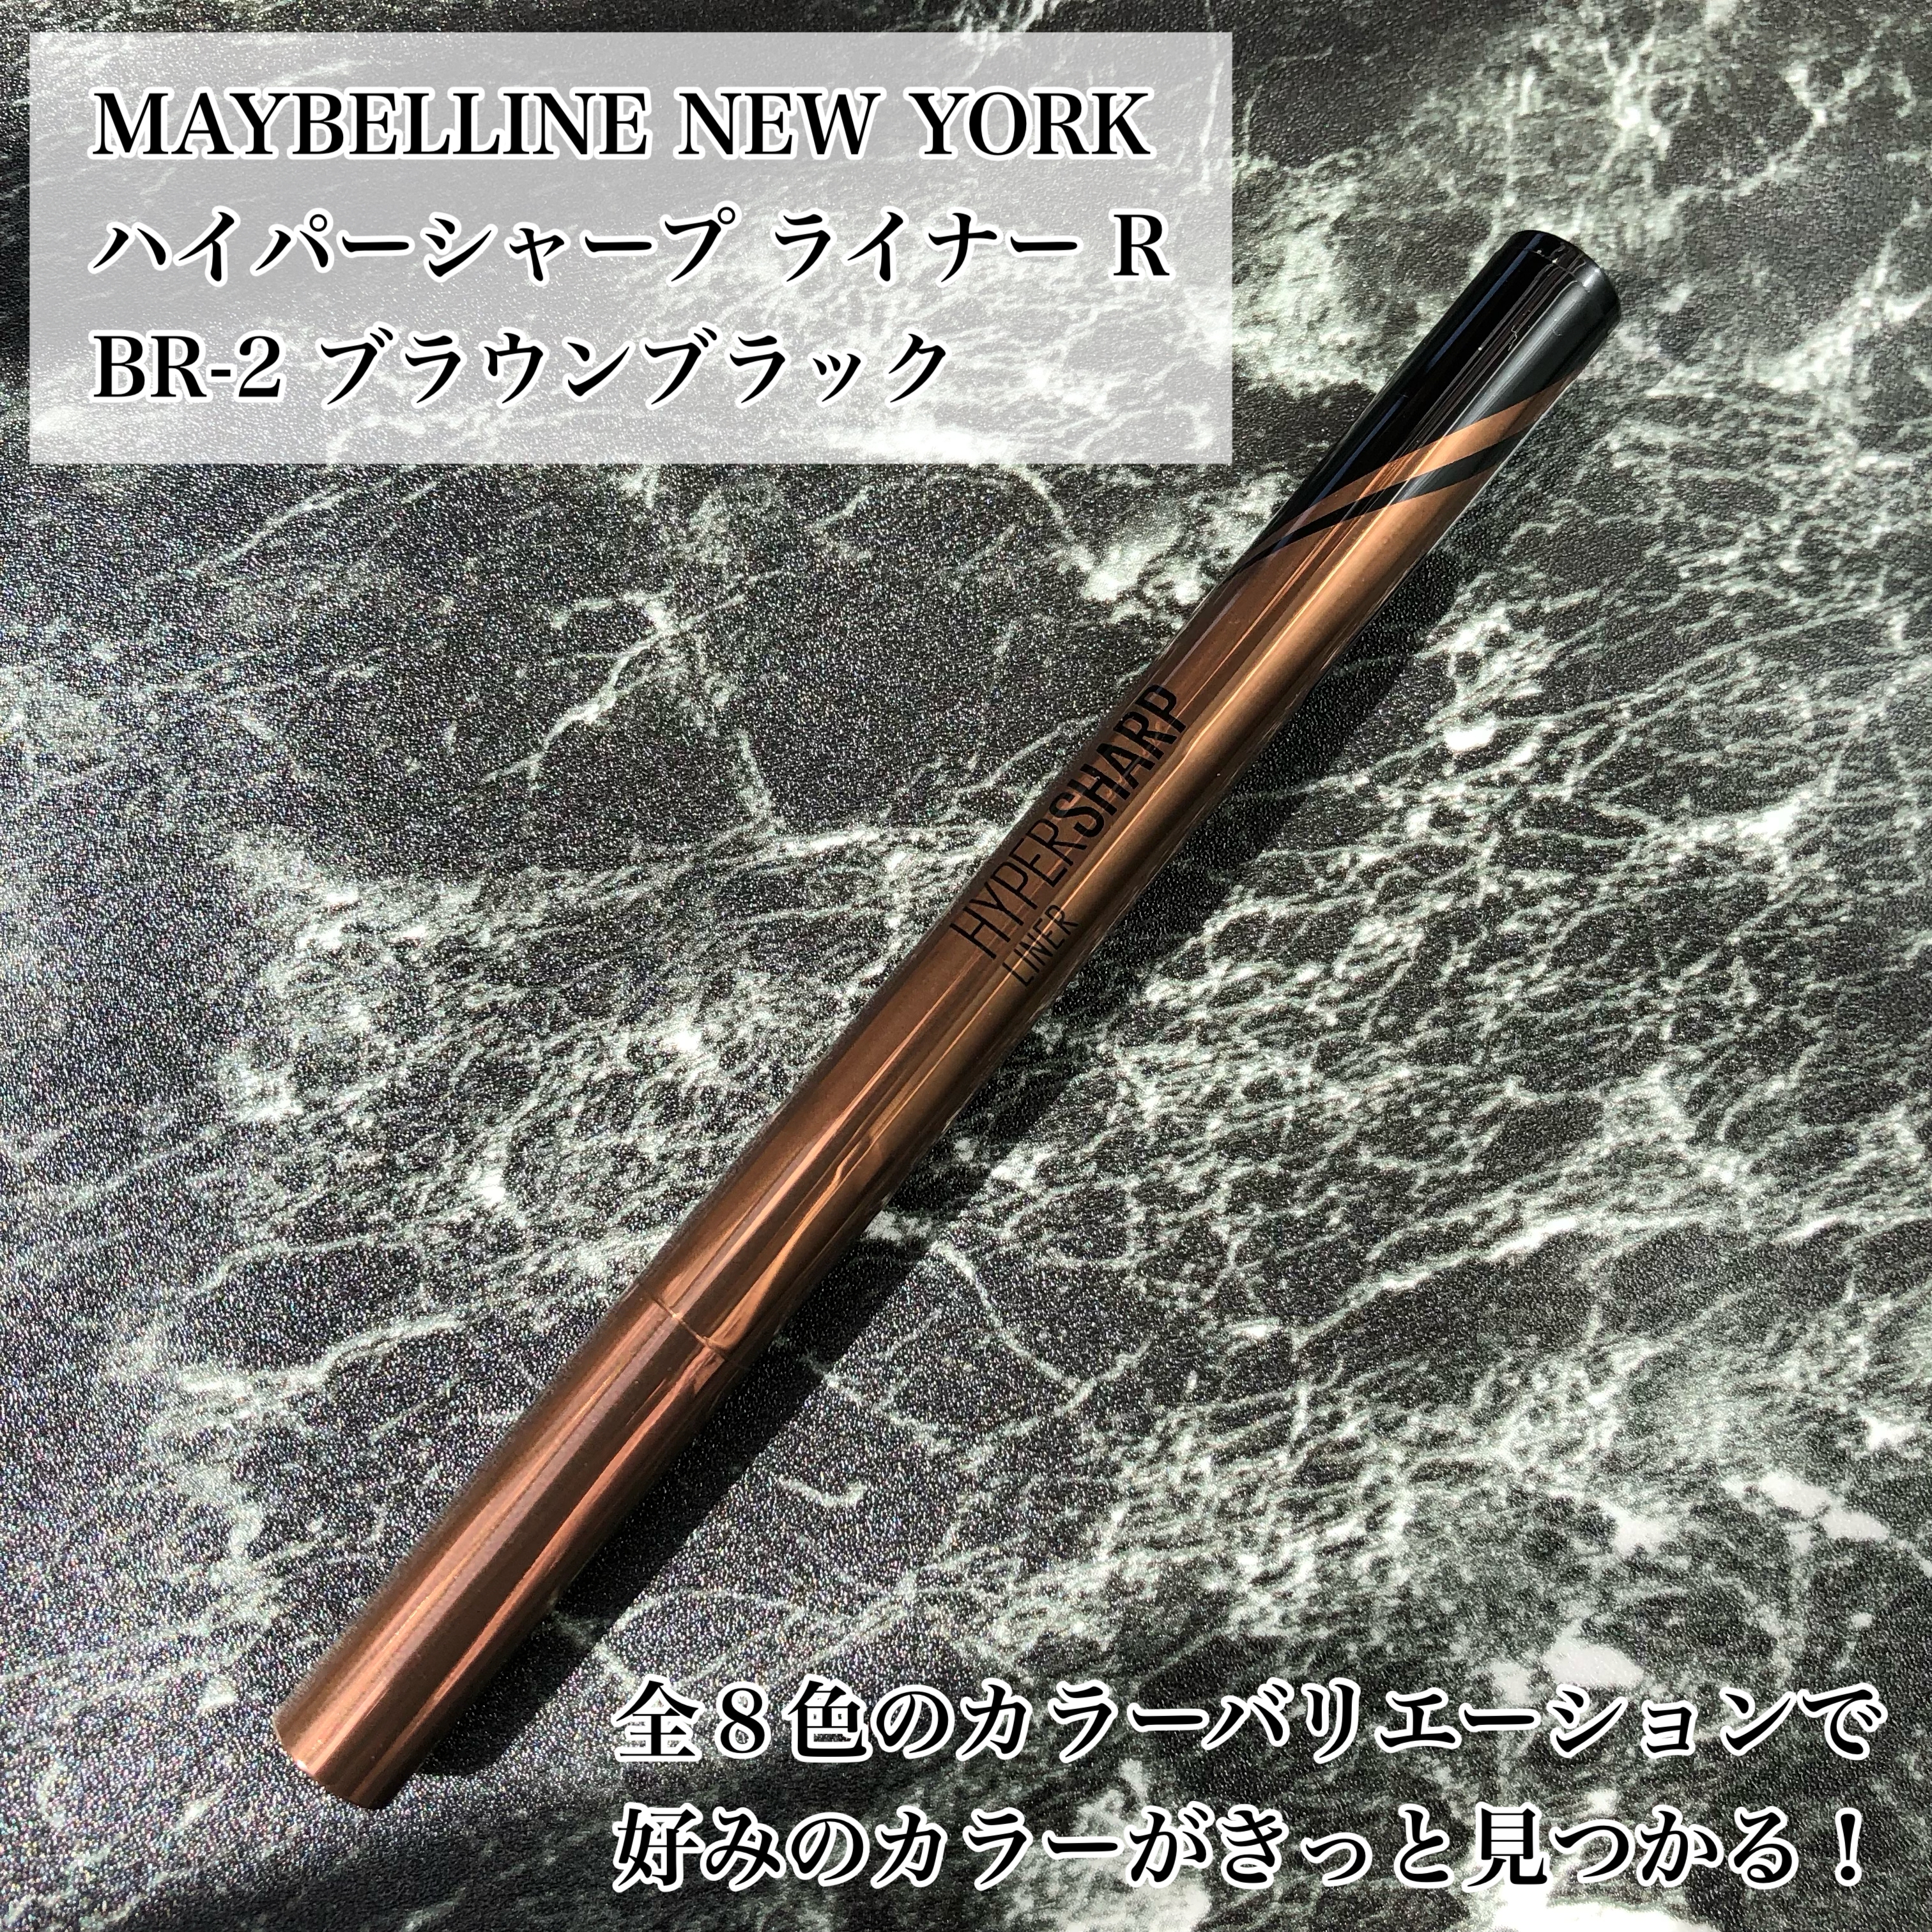 MAYBELLINE NEW YORK(メイベリン ニューヨーク)ハイパーシャープ ライナー Rを使ったsachikoさんのクチコミ画像2